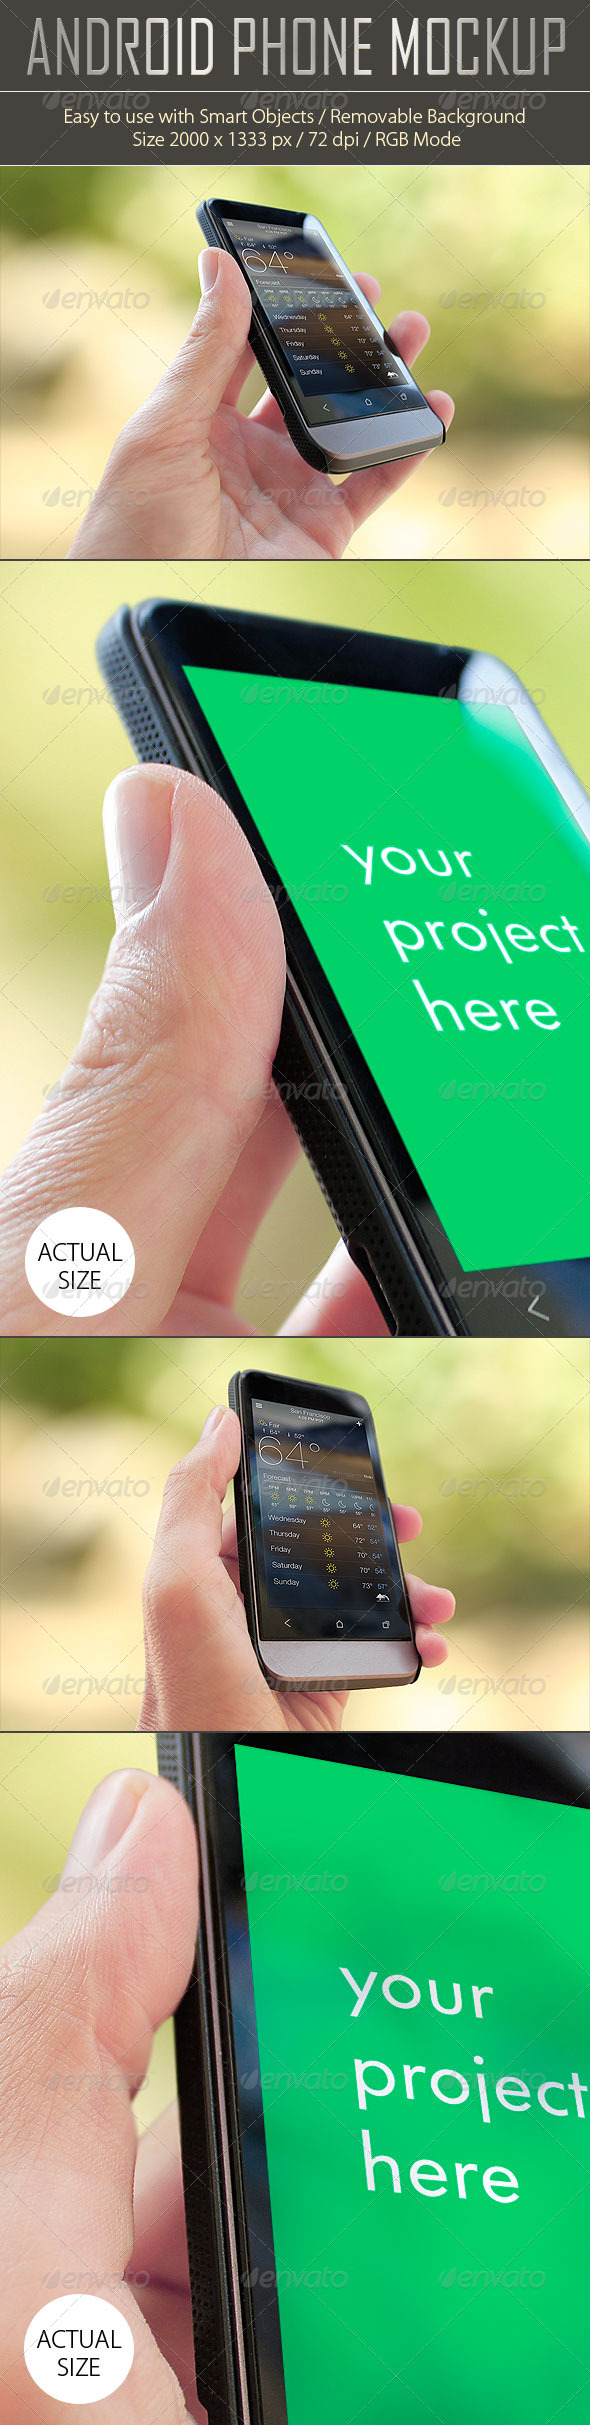 Android Phone Mockup